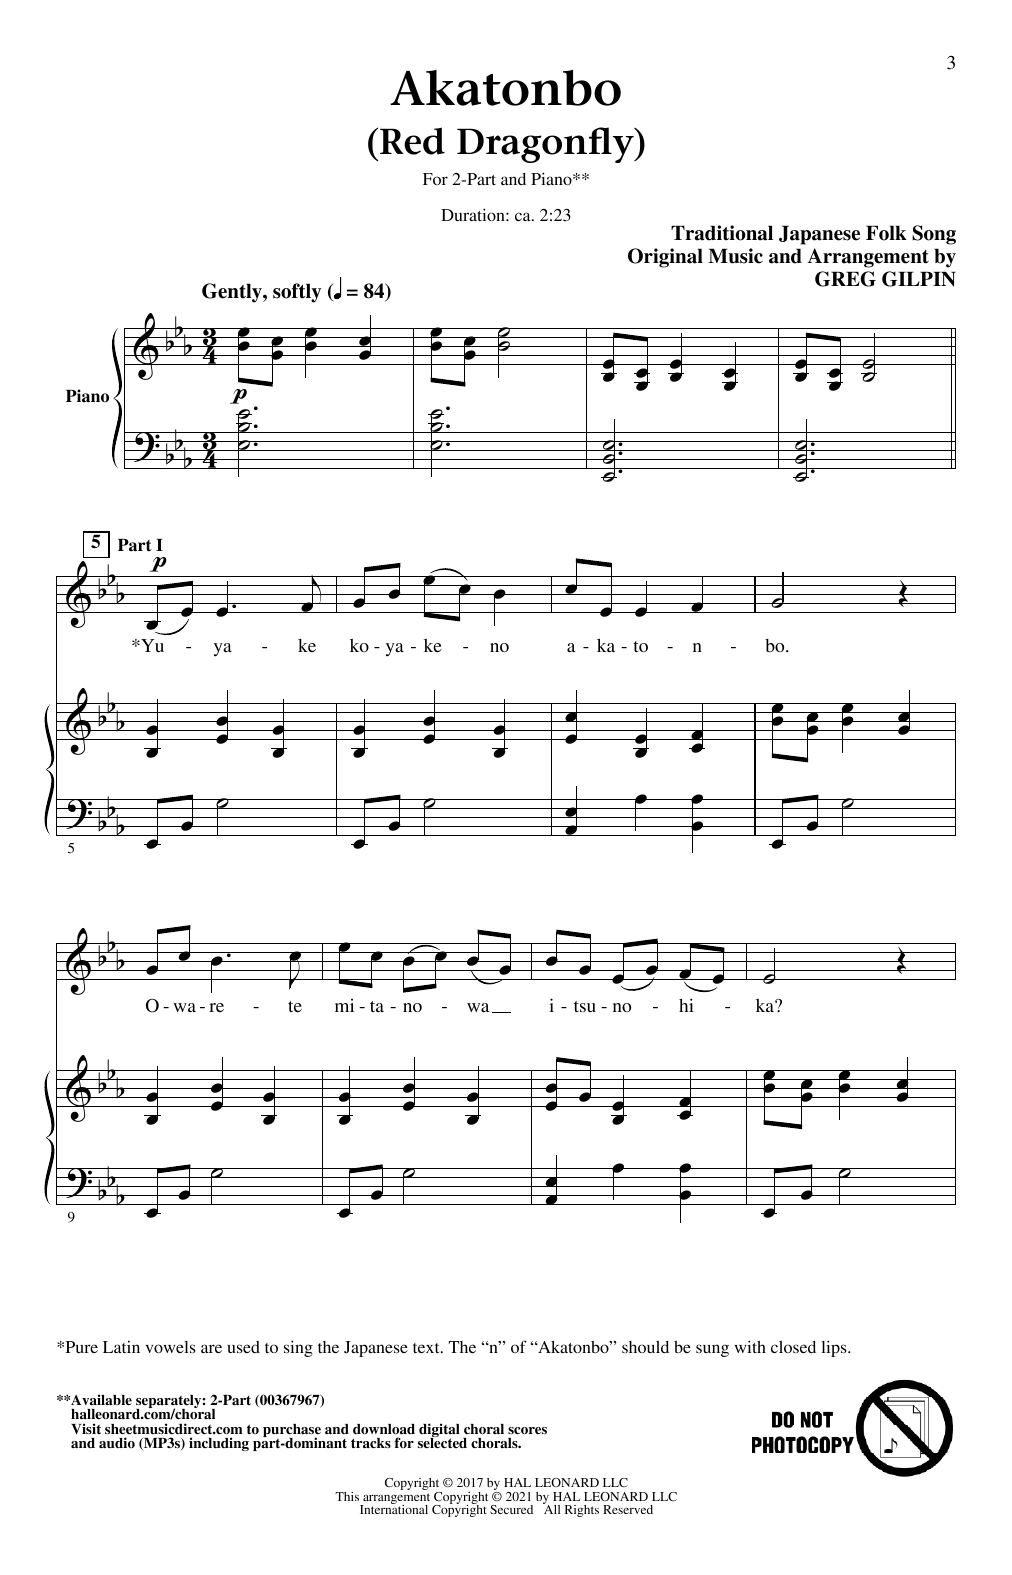 Traditional Japanese Folk Song Akatonbo (Red Dragonfly) (arr. Greg Gilpin) sheet music notes printable PDF score